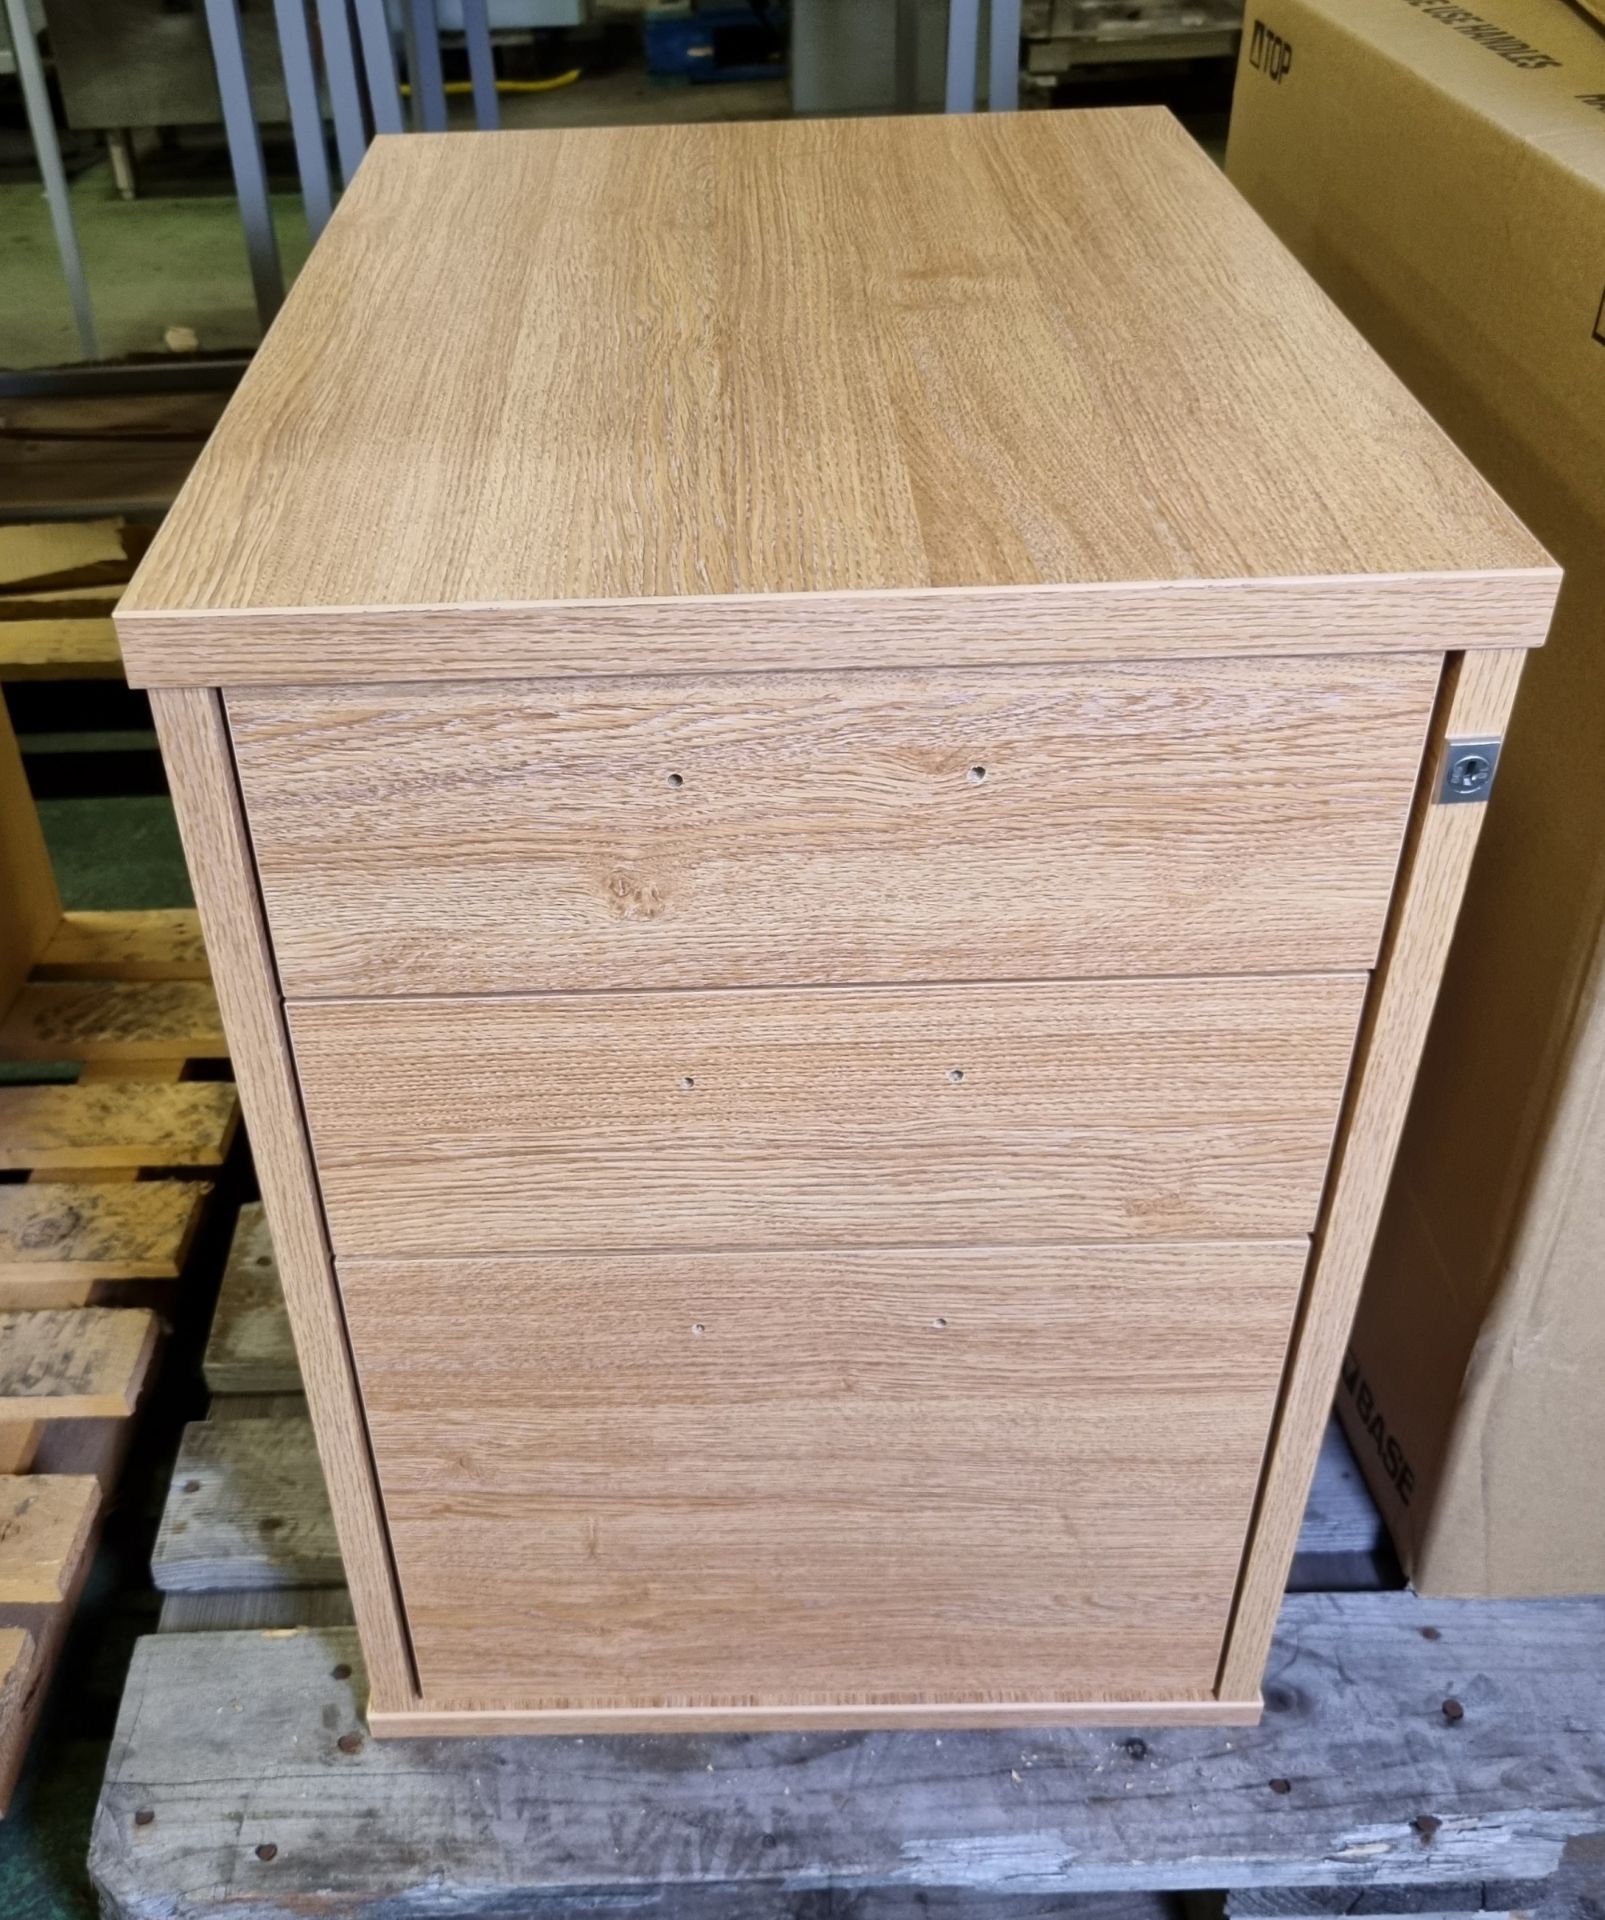 Dams TMPO 3 drawer tall mobile pedestal - light oak - W 420 x D 600 x H 600mm